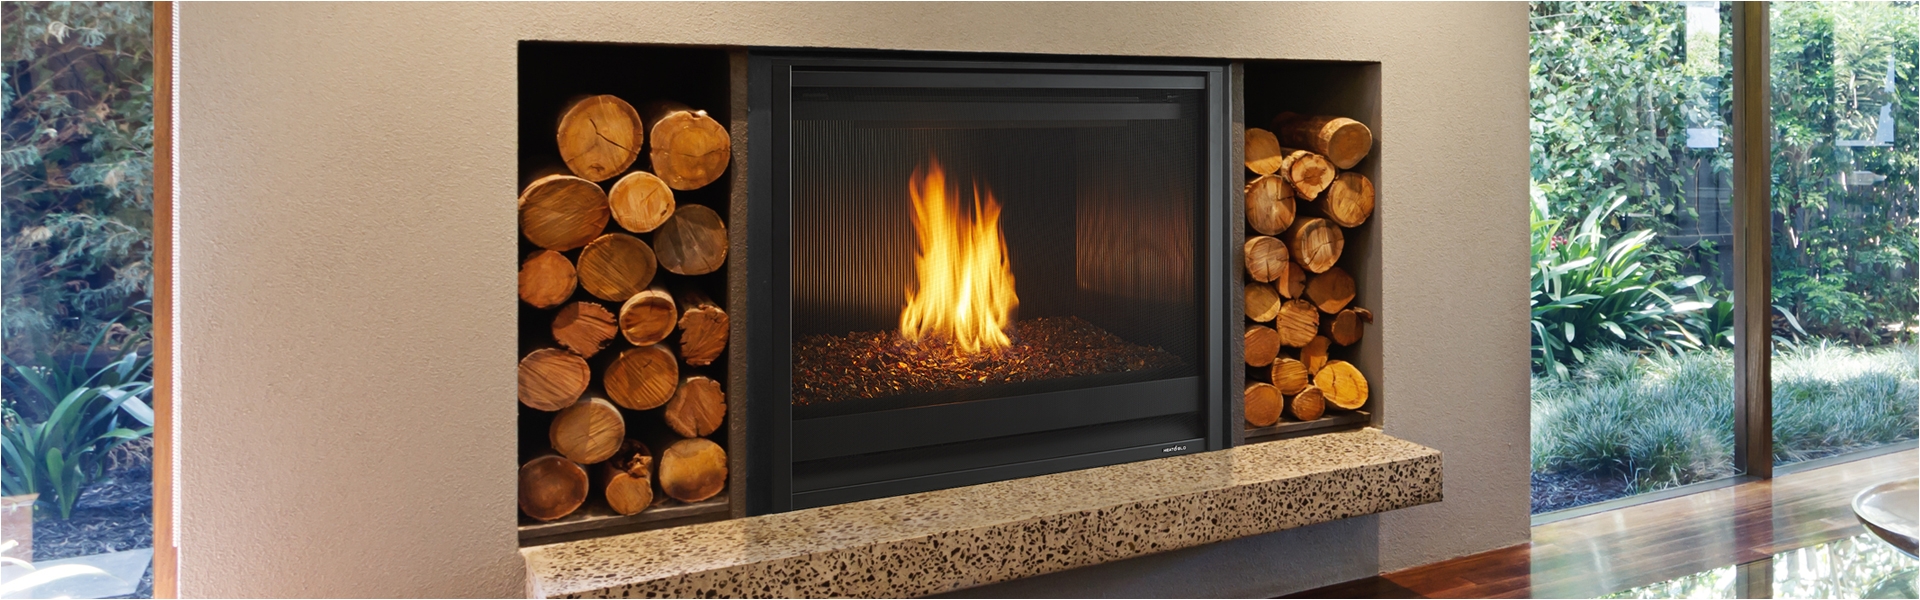 6000 modern gas fireplace